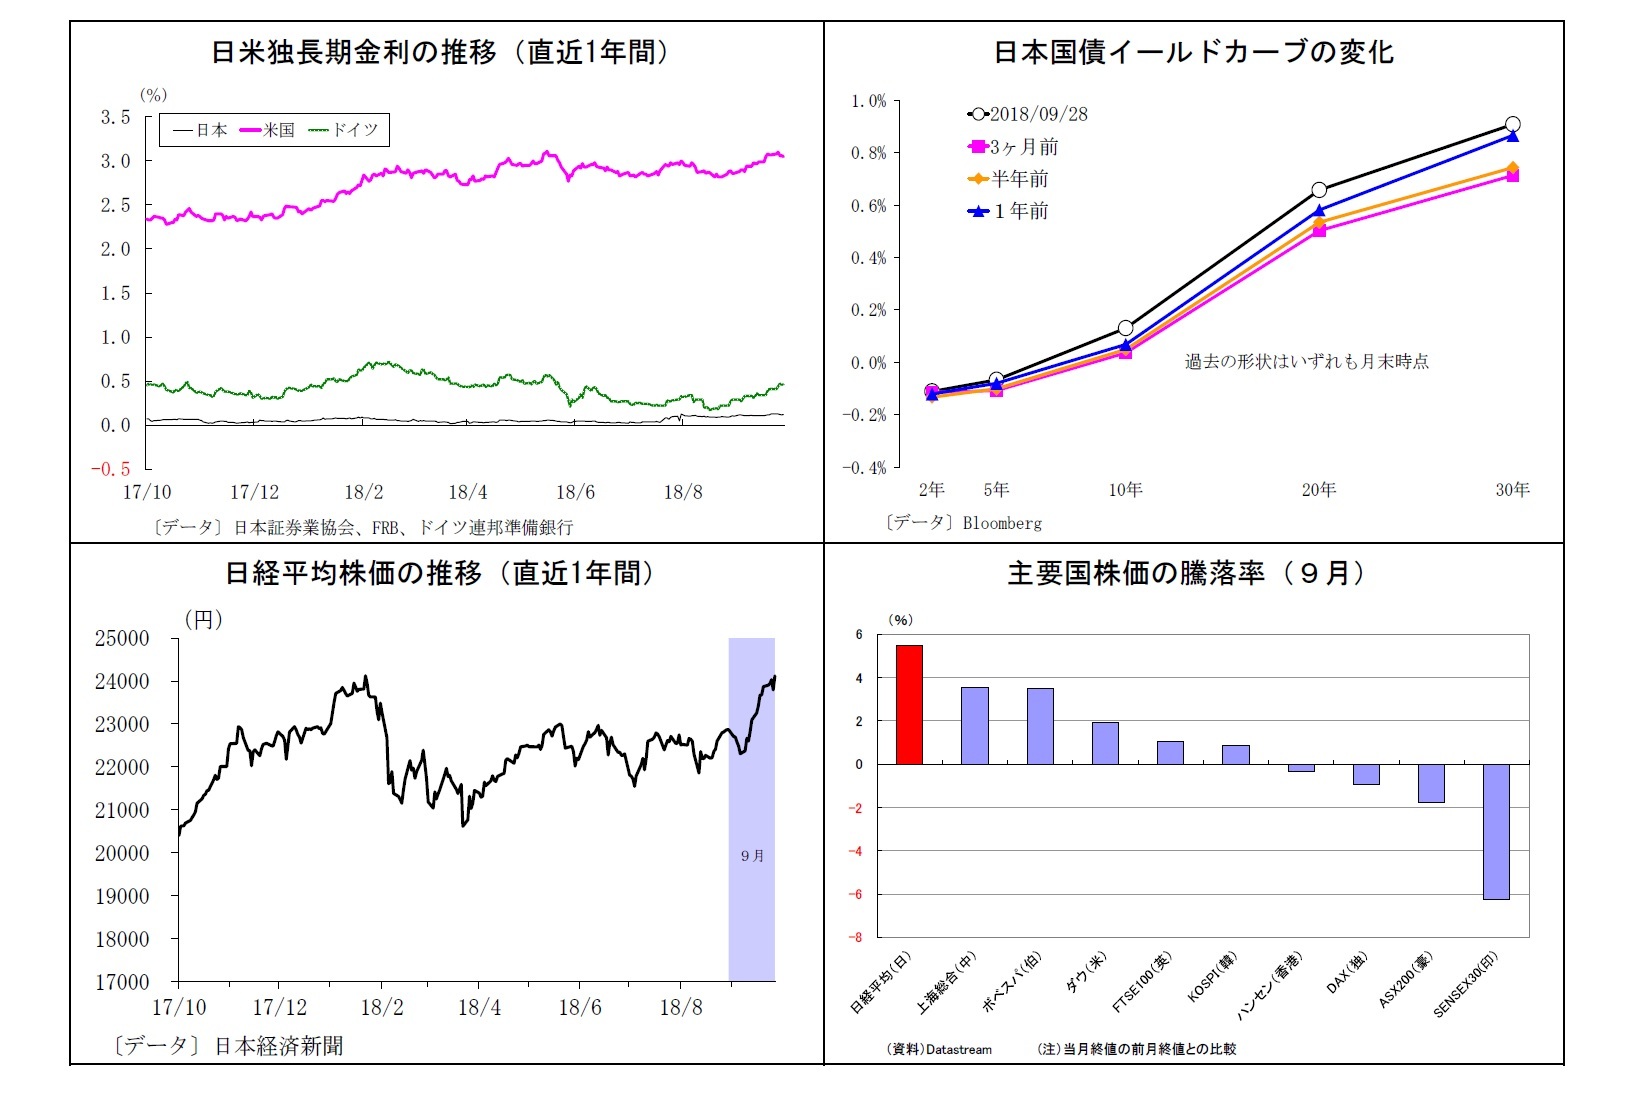 日米独長期金利の推移（直近1年間）/日本国債イールドカーブの変化/日経平均株価の推移（直近1年間）/主要国株価の騰落率（９月）